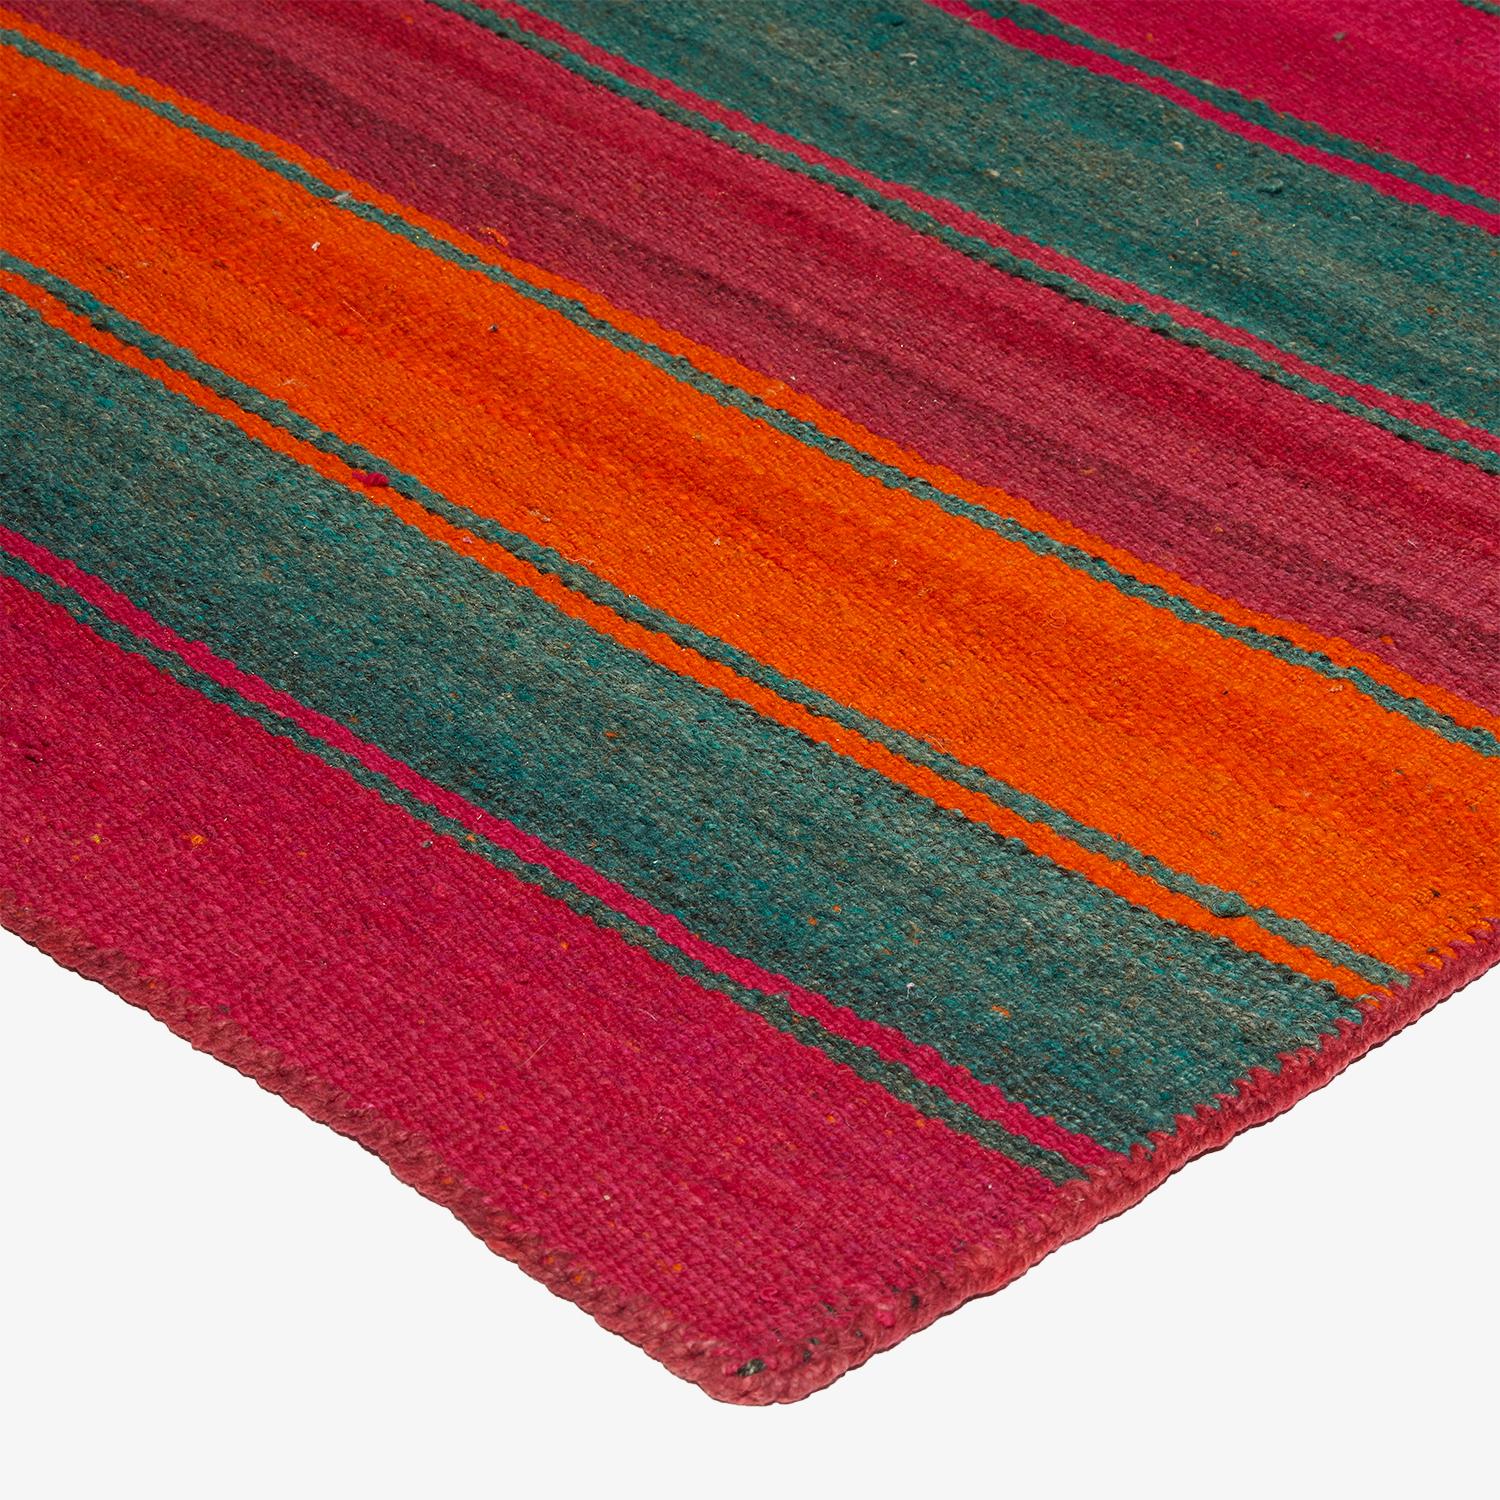 Argentine abc carpet Multicolored Vintage Karabagh Wool Kilim Rug - 4'8